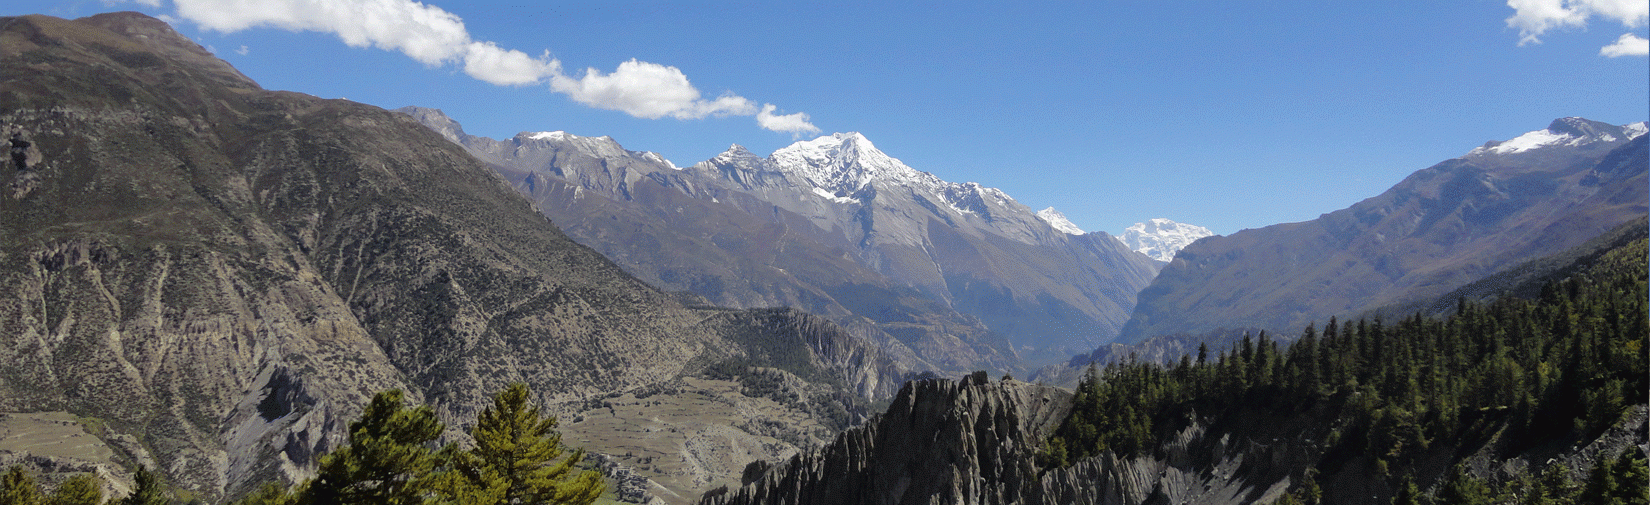 Manang Valley at Annapurna Circuit Trek